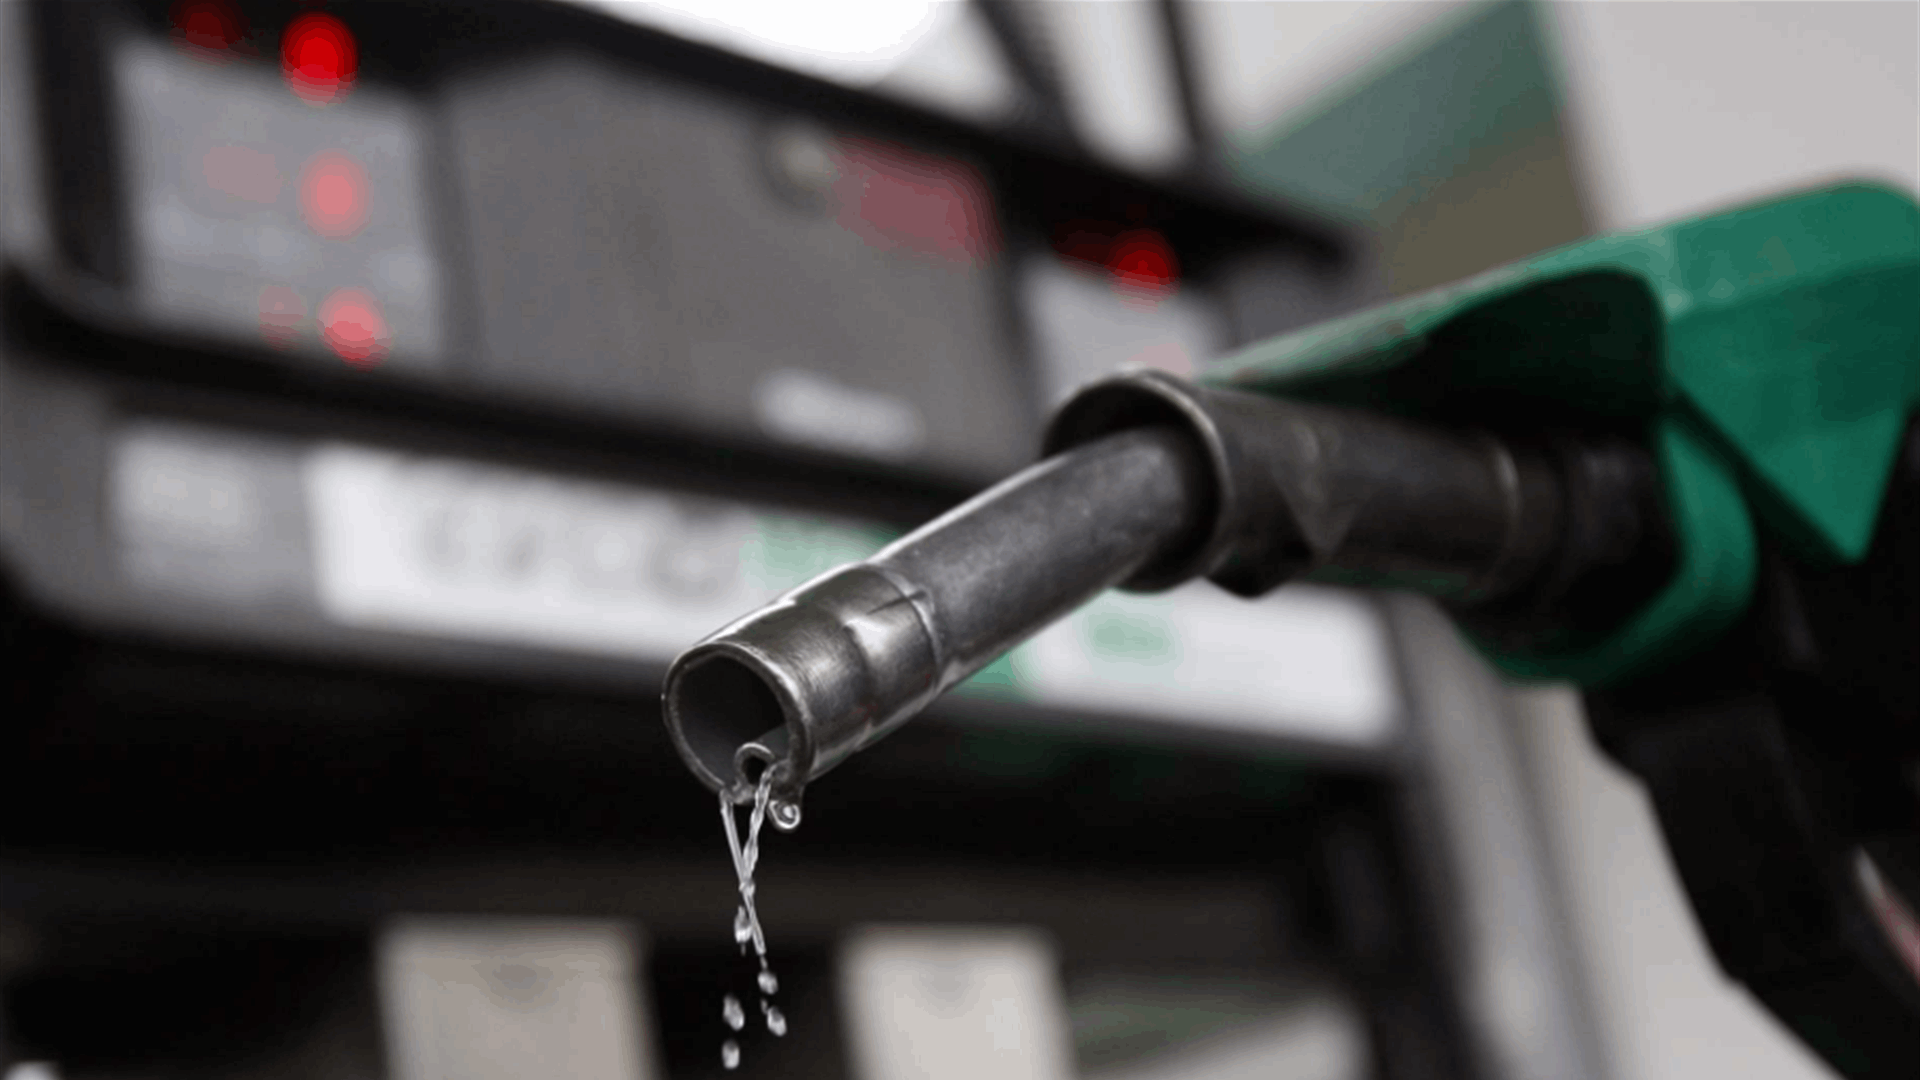 Fuel prices keep soaring across Lebanon